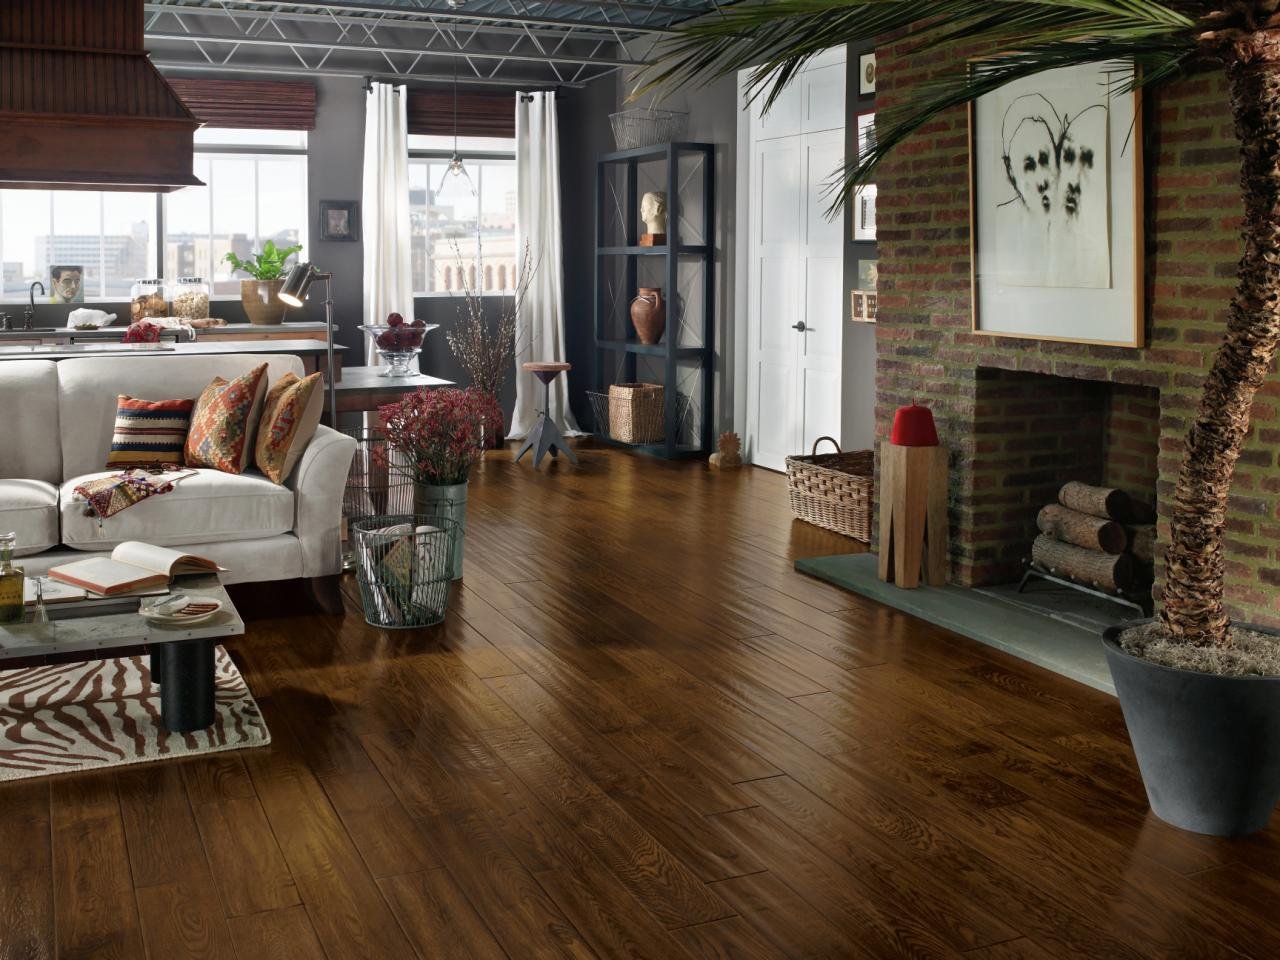 Living Room With Medium Wood Color Floors